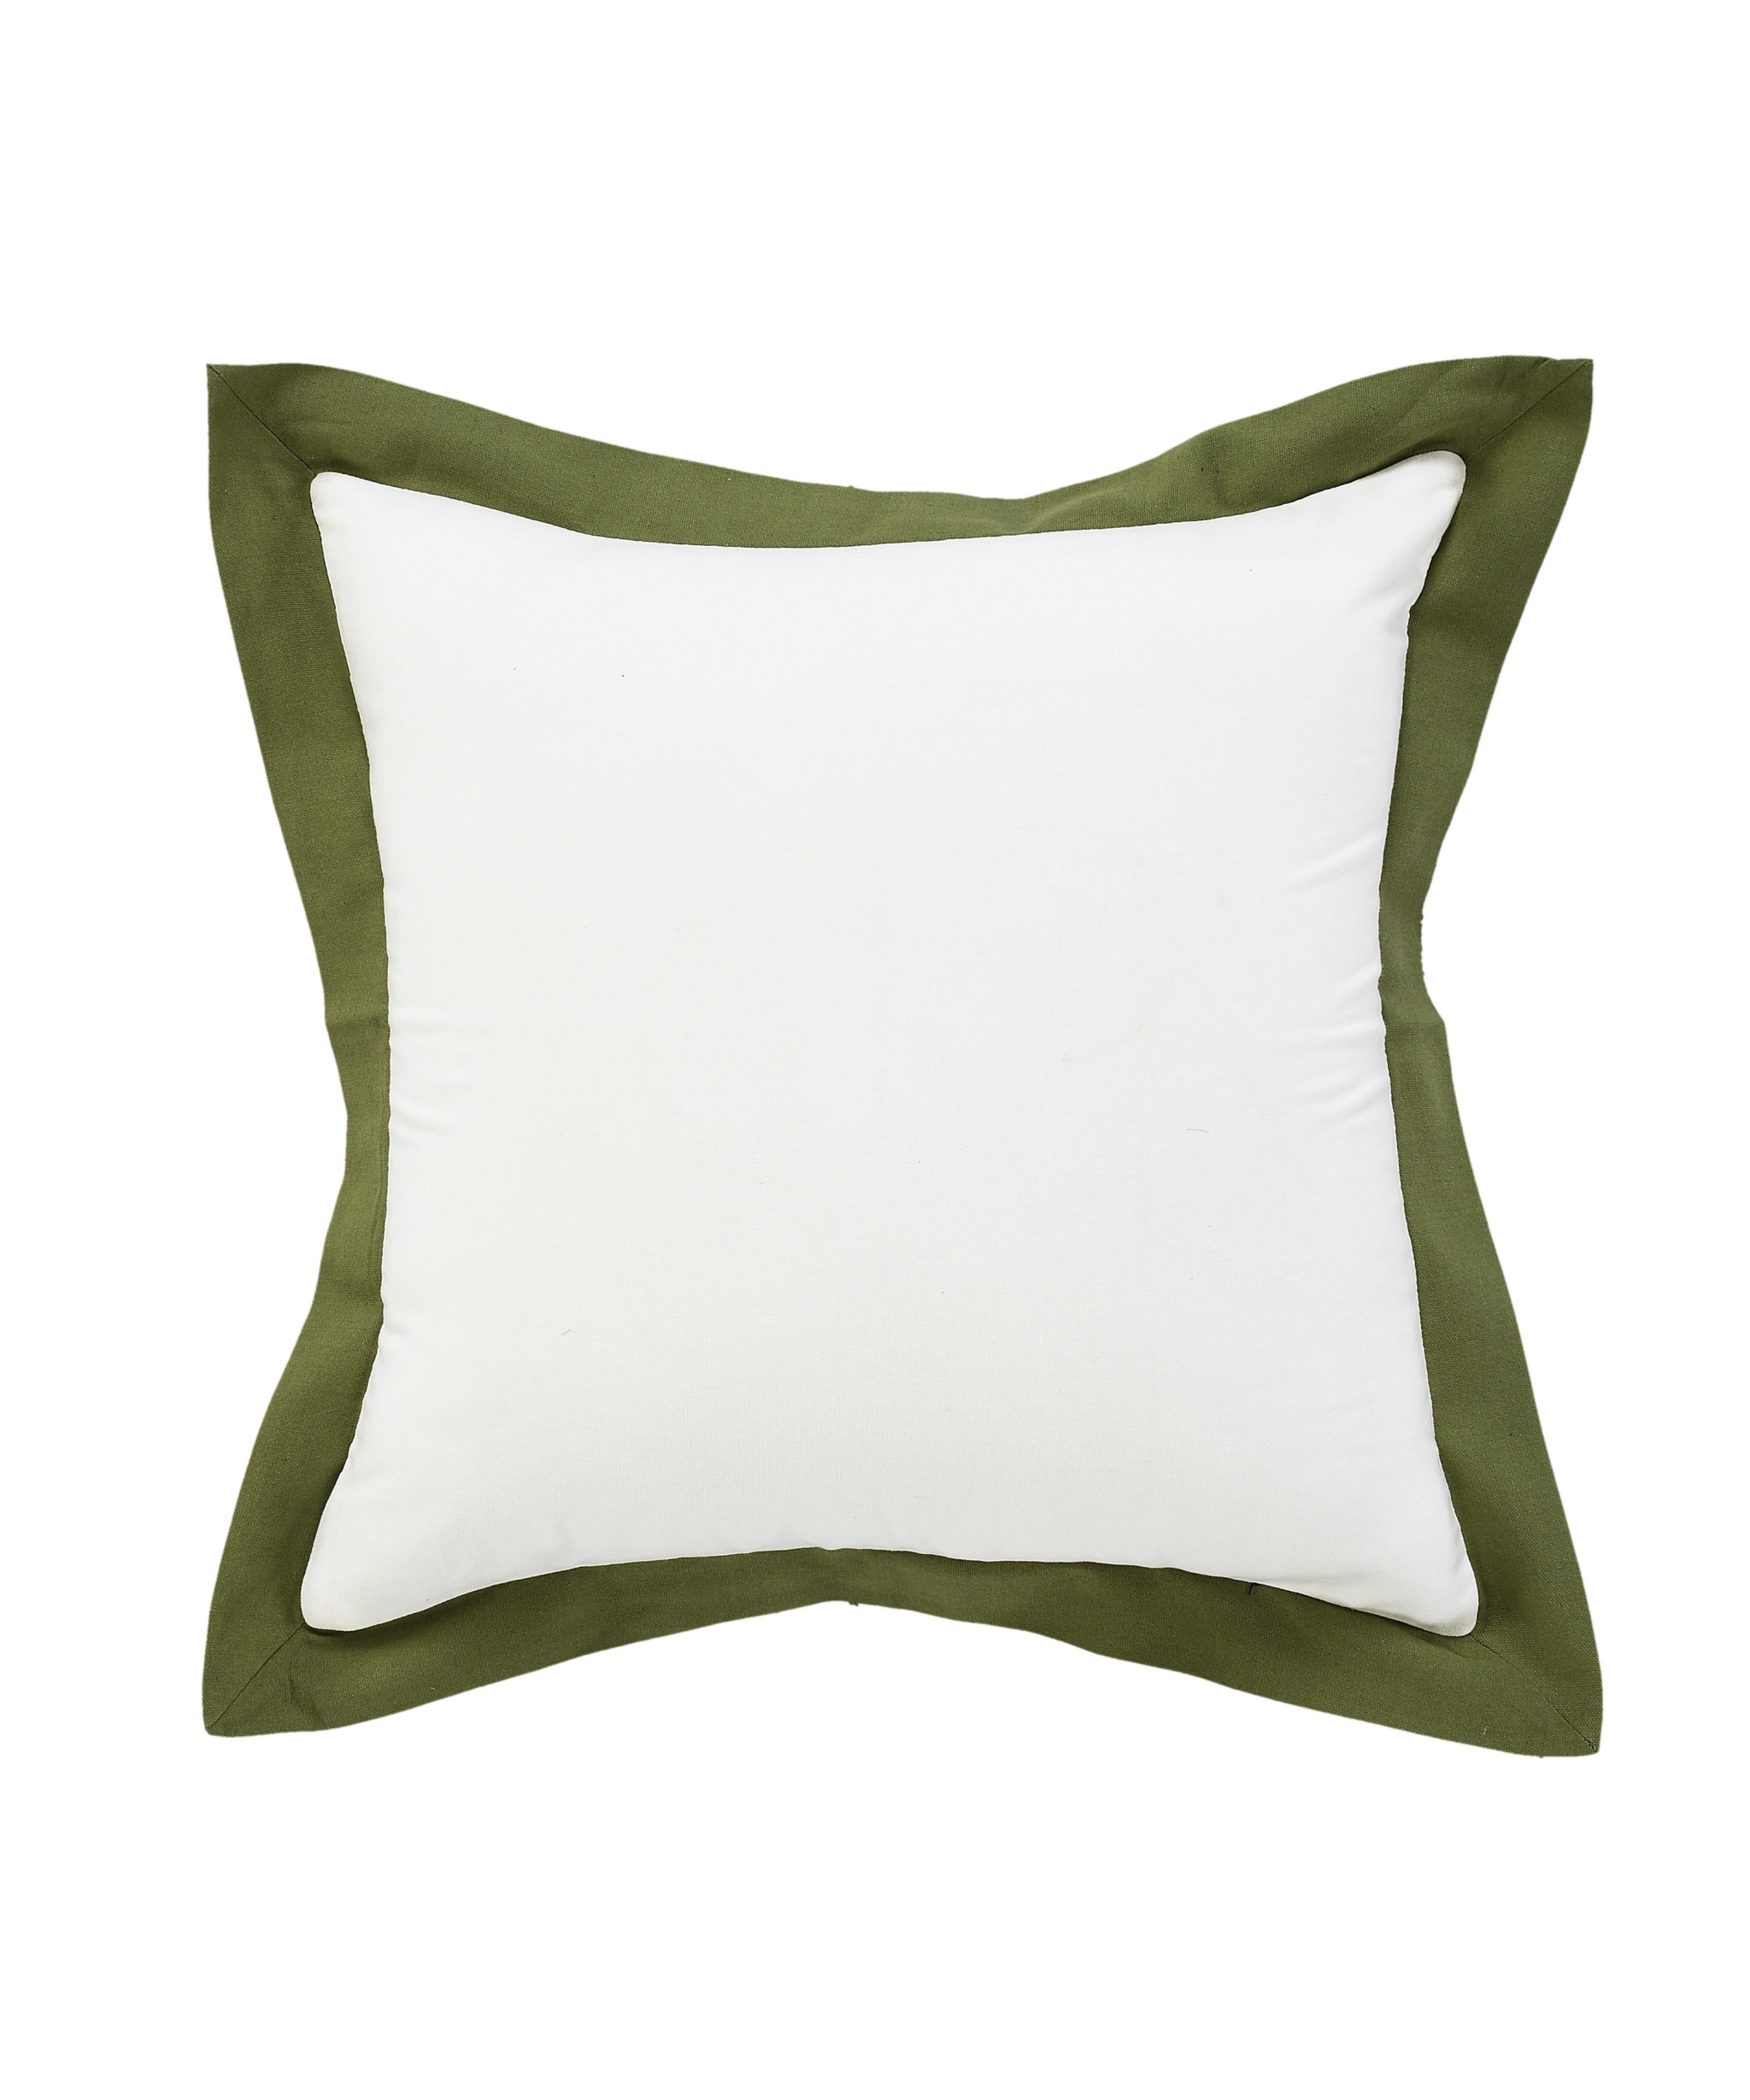 20" X 20" White And Moss Green 100% Cotton Geometric Zippered Pillow-516832-1